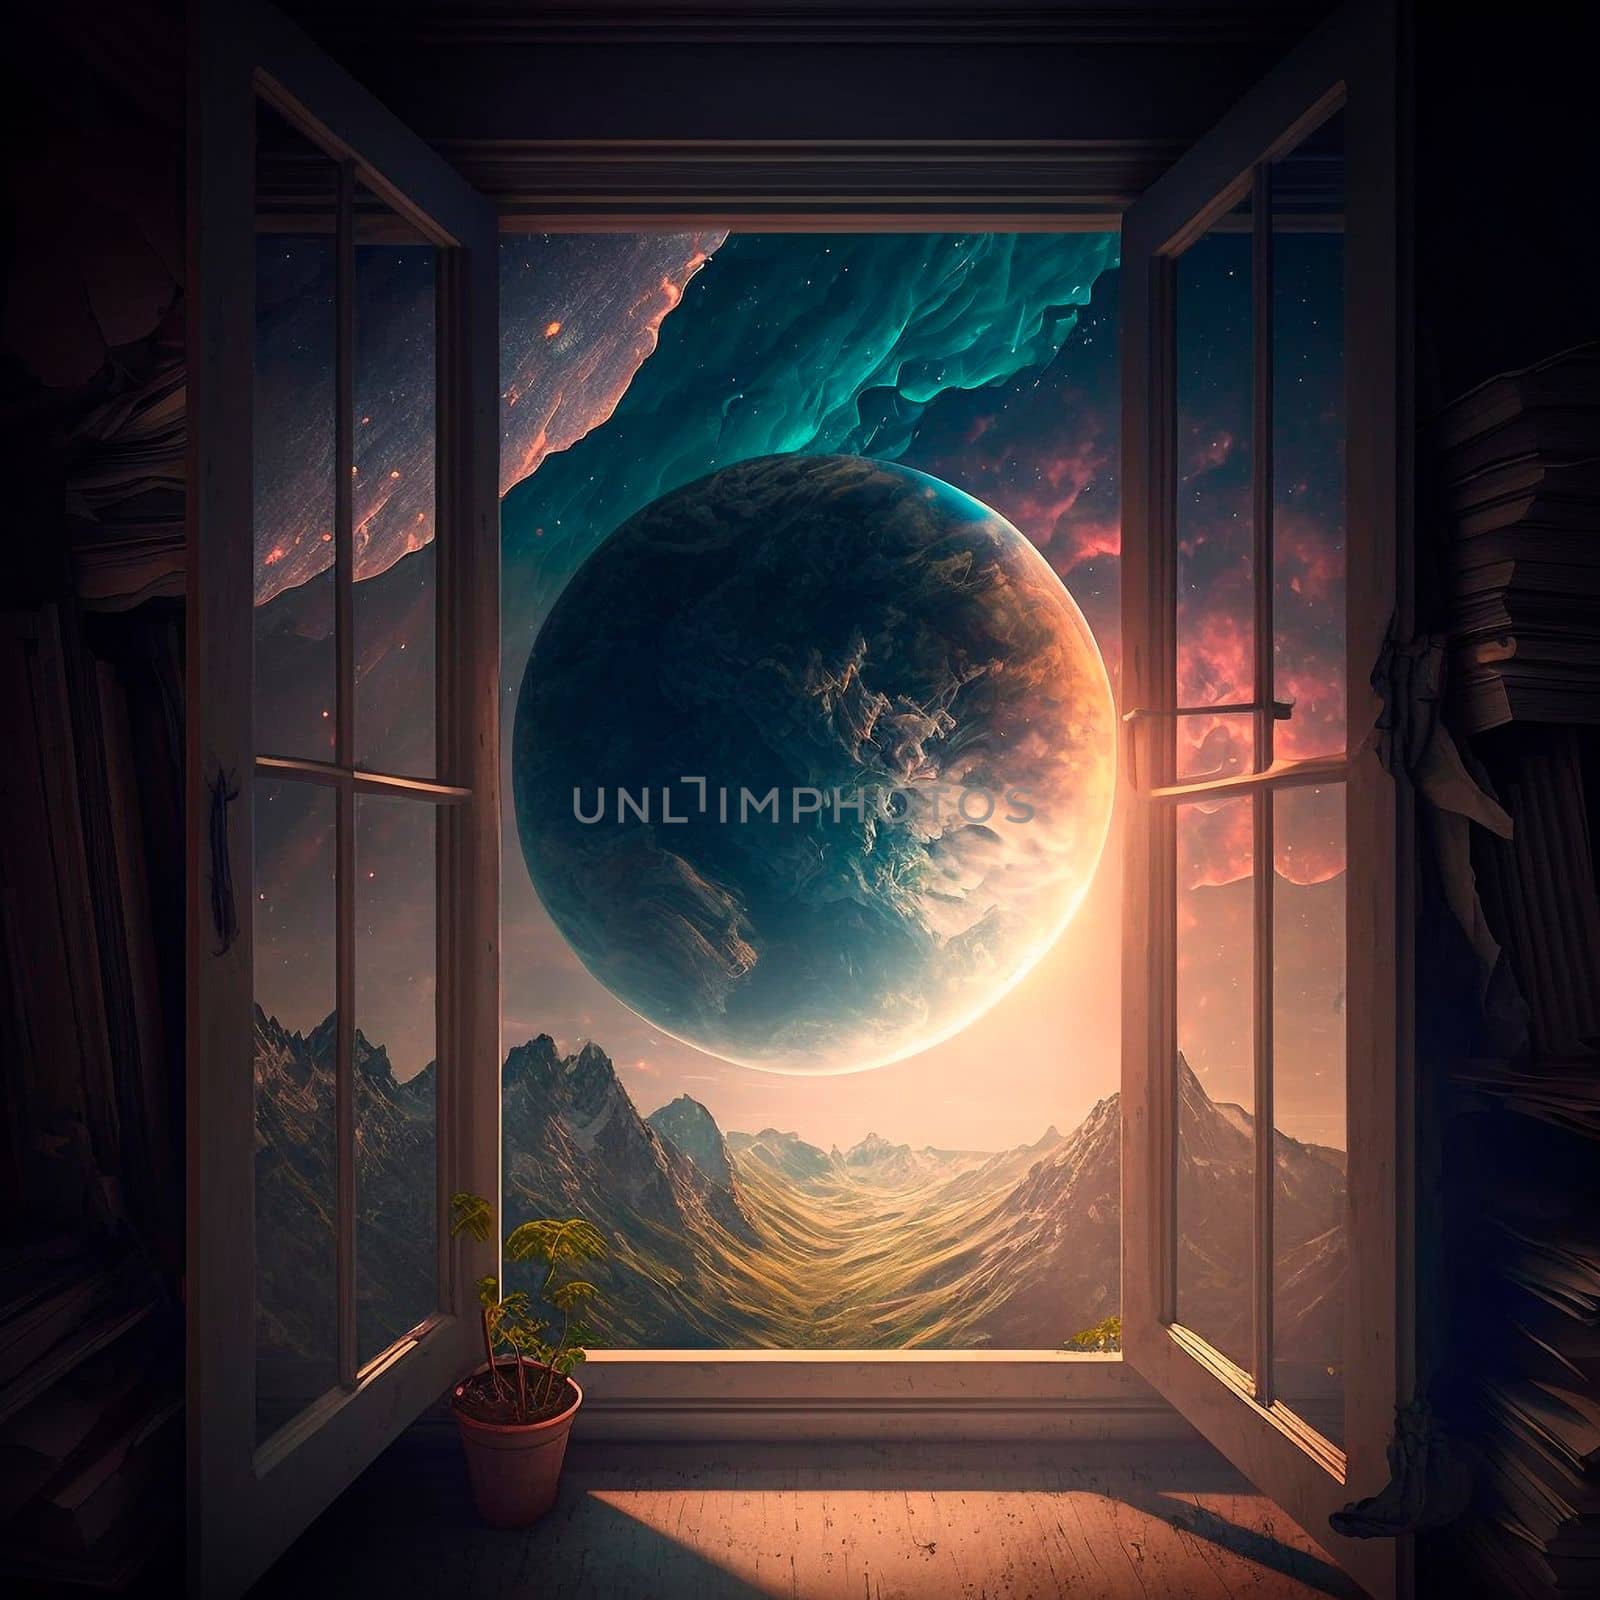 The fabulous world outside the window by NeuroSky